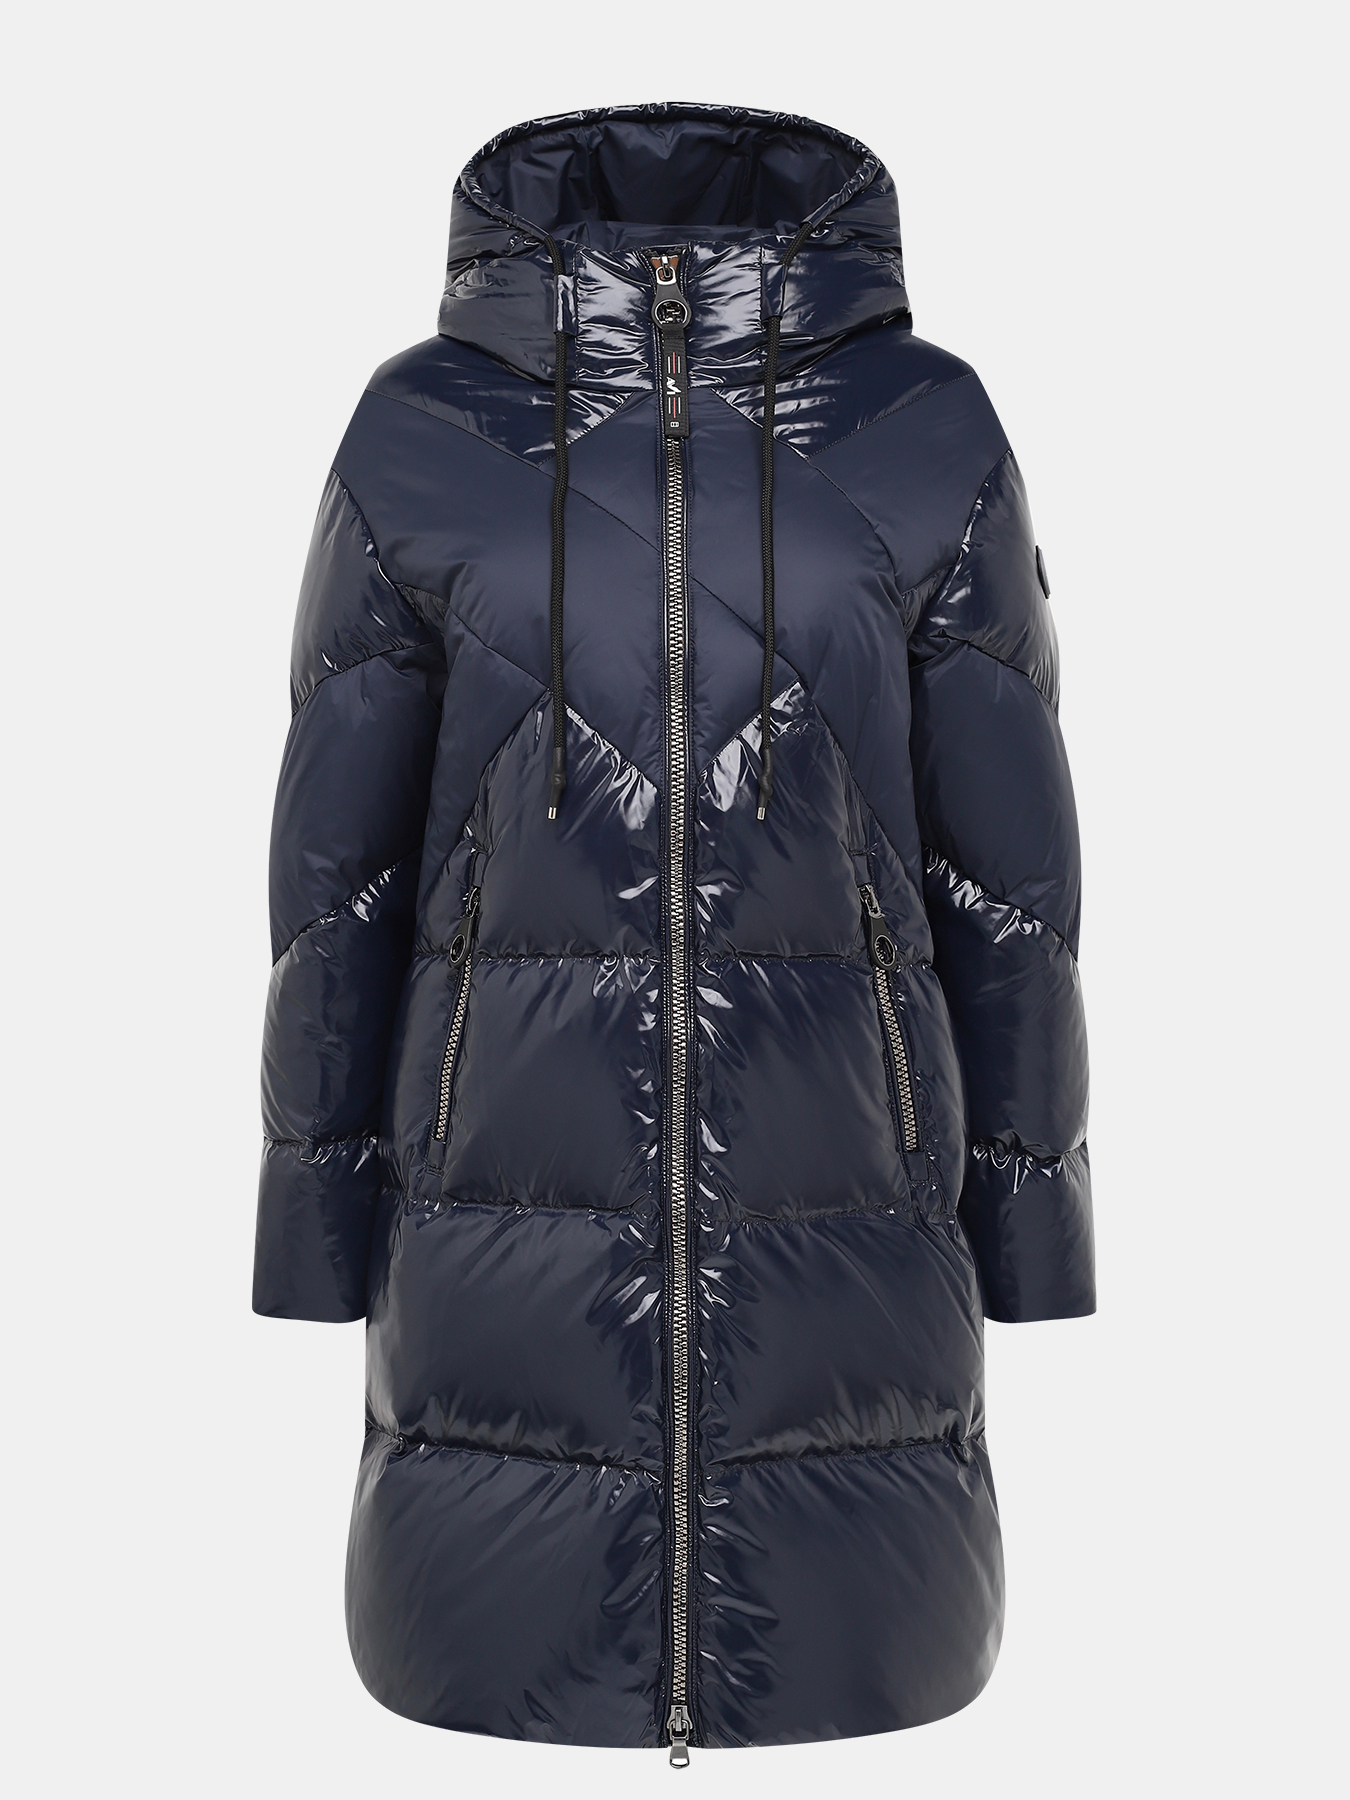 Пальто зимнее AVI 433522-021, цвет темно-синий, размер 46